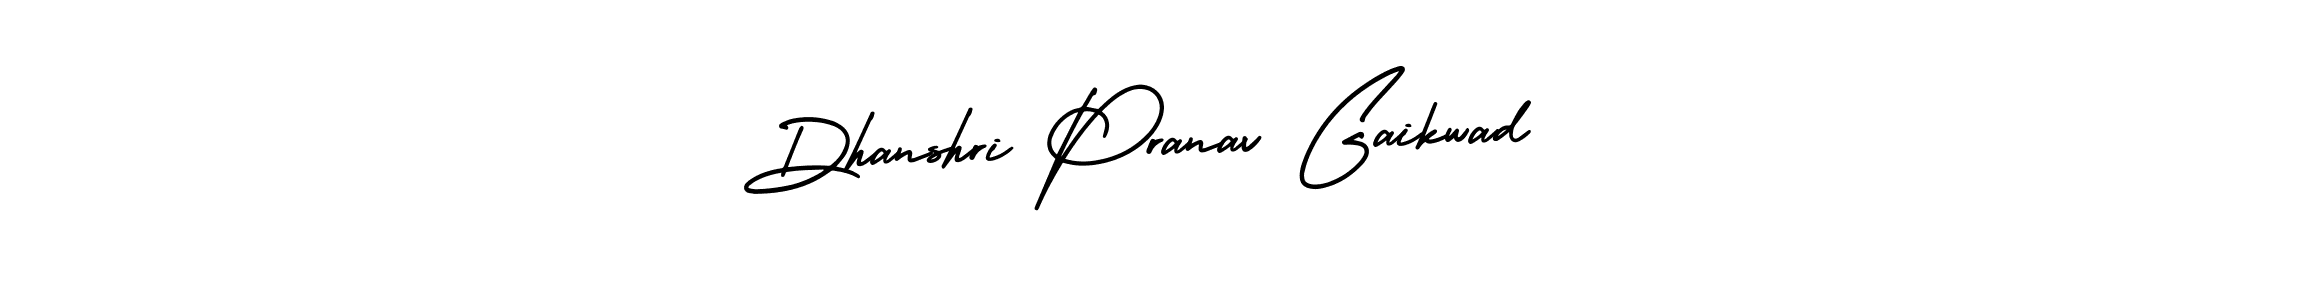 Best and Professional Signature Style for Dhanshri Pranav Gaikwad. AmerikaSignatureDemo-Regular Best Signature Style Collection. Dhanshri Pranav Gaikwad signature style 3 images and pictures png